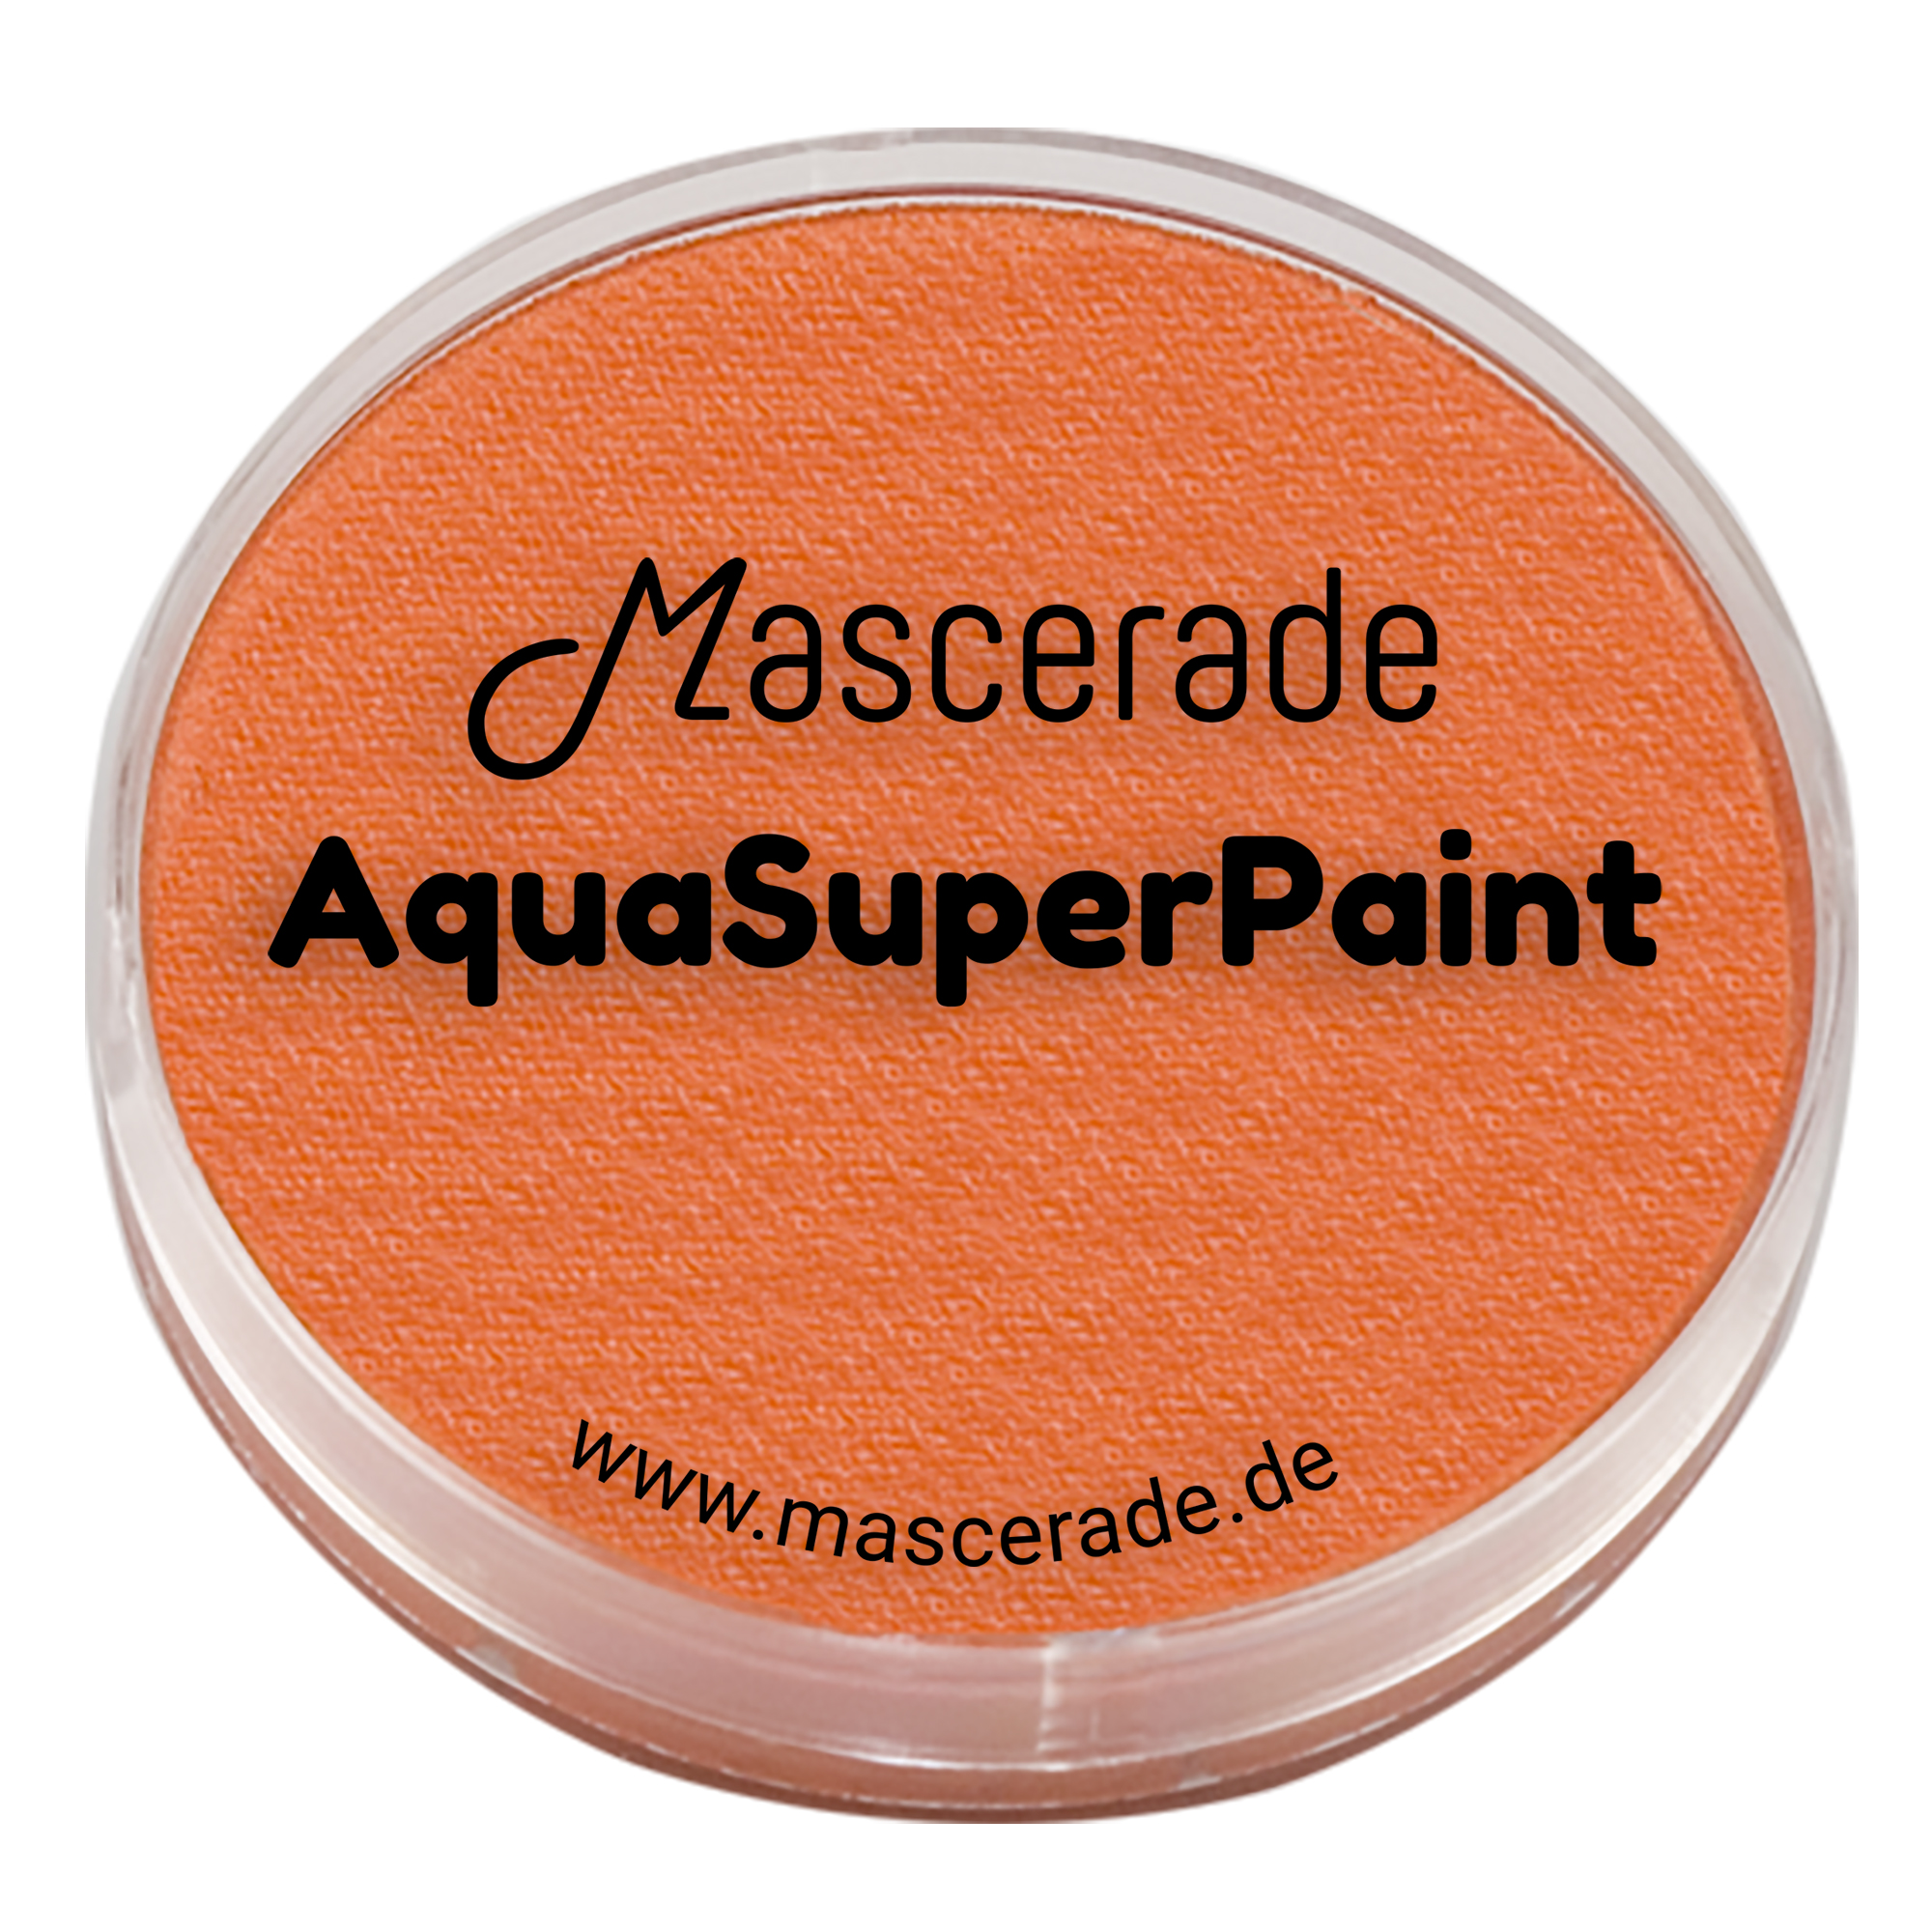 Mascerade AquaSuperPaint Orange mit Glitter 30 ml Dose